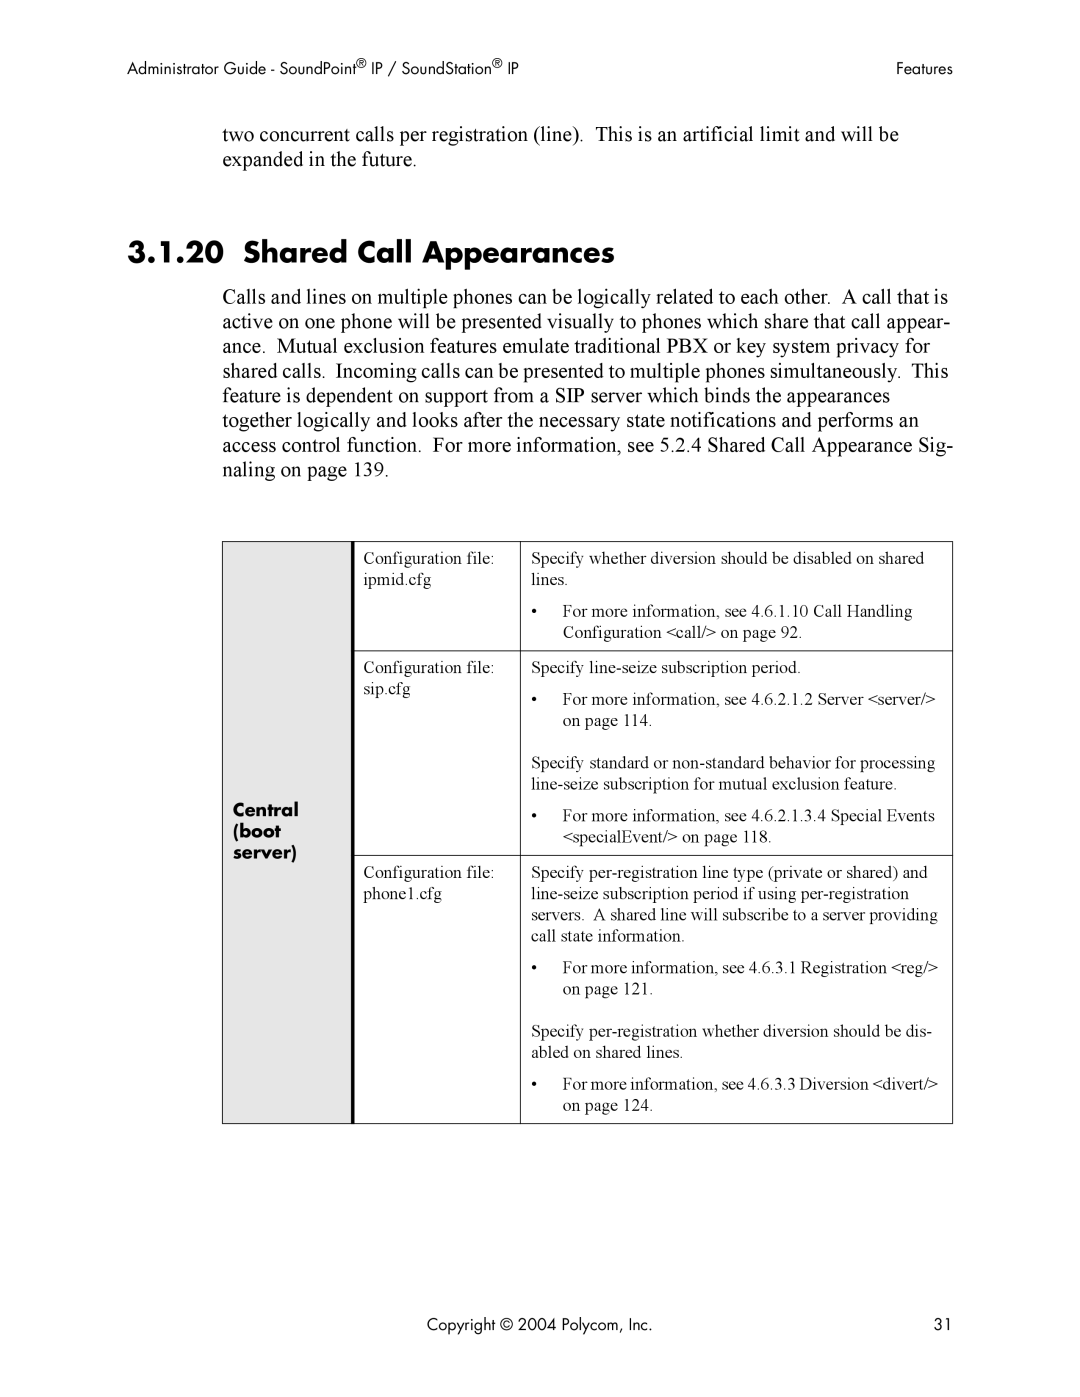 Polycom Version 1.4.x 17 manual Shared Call Appearances 